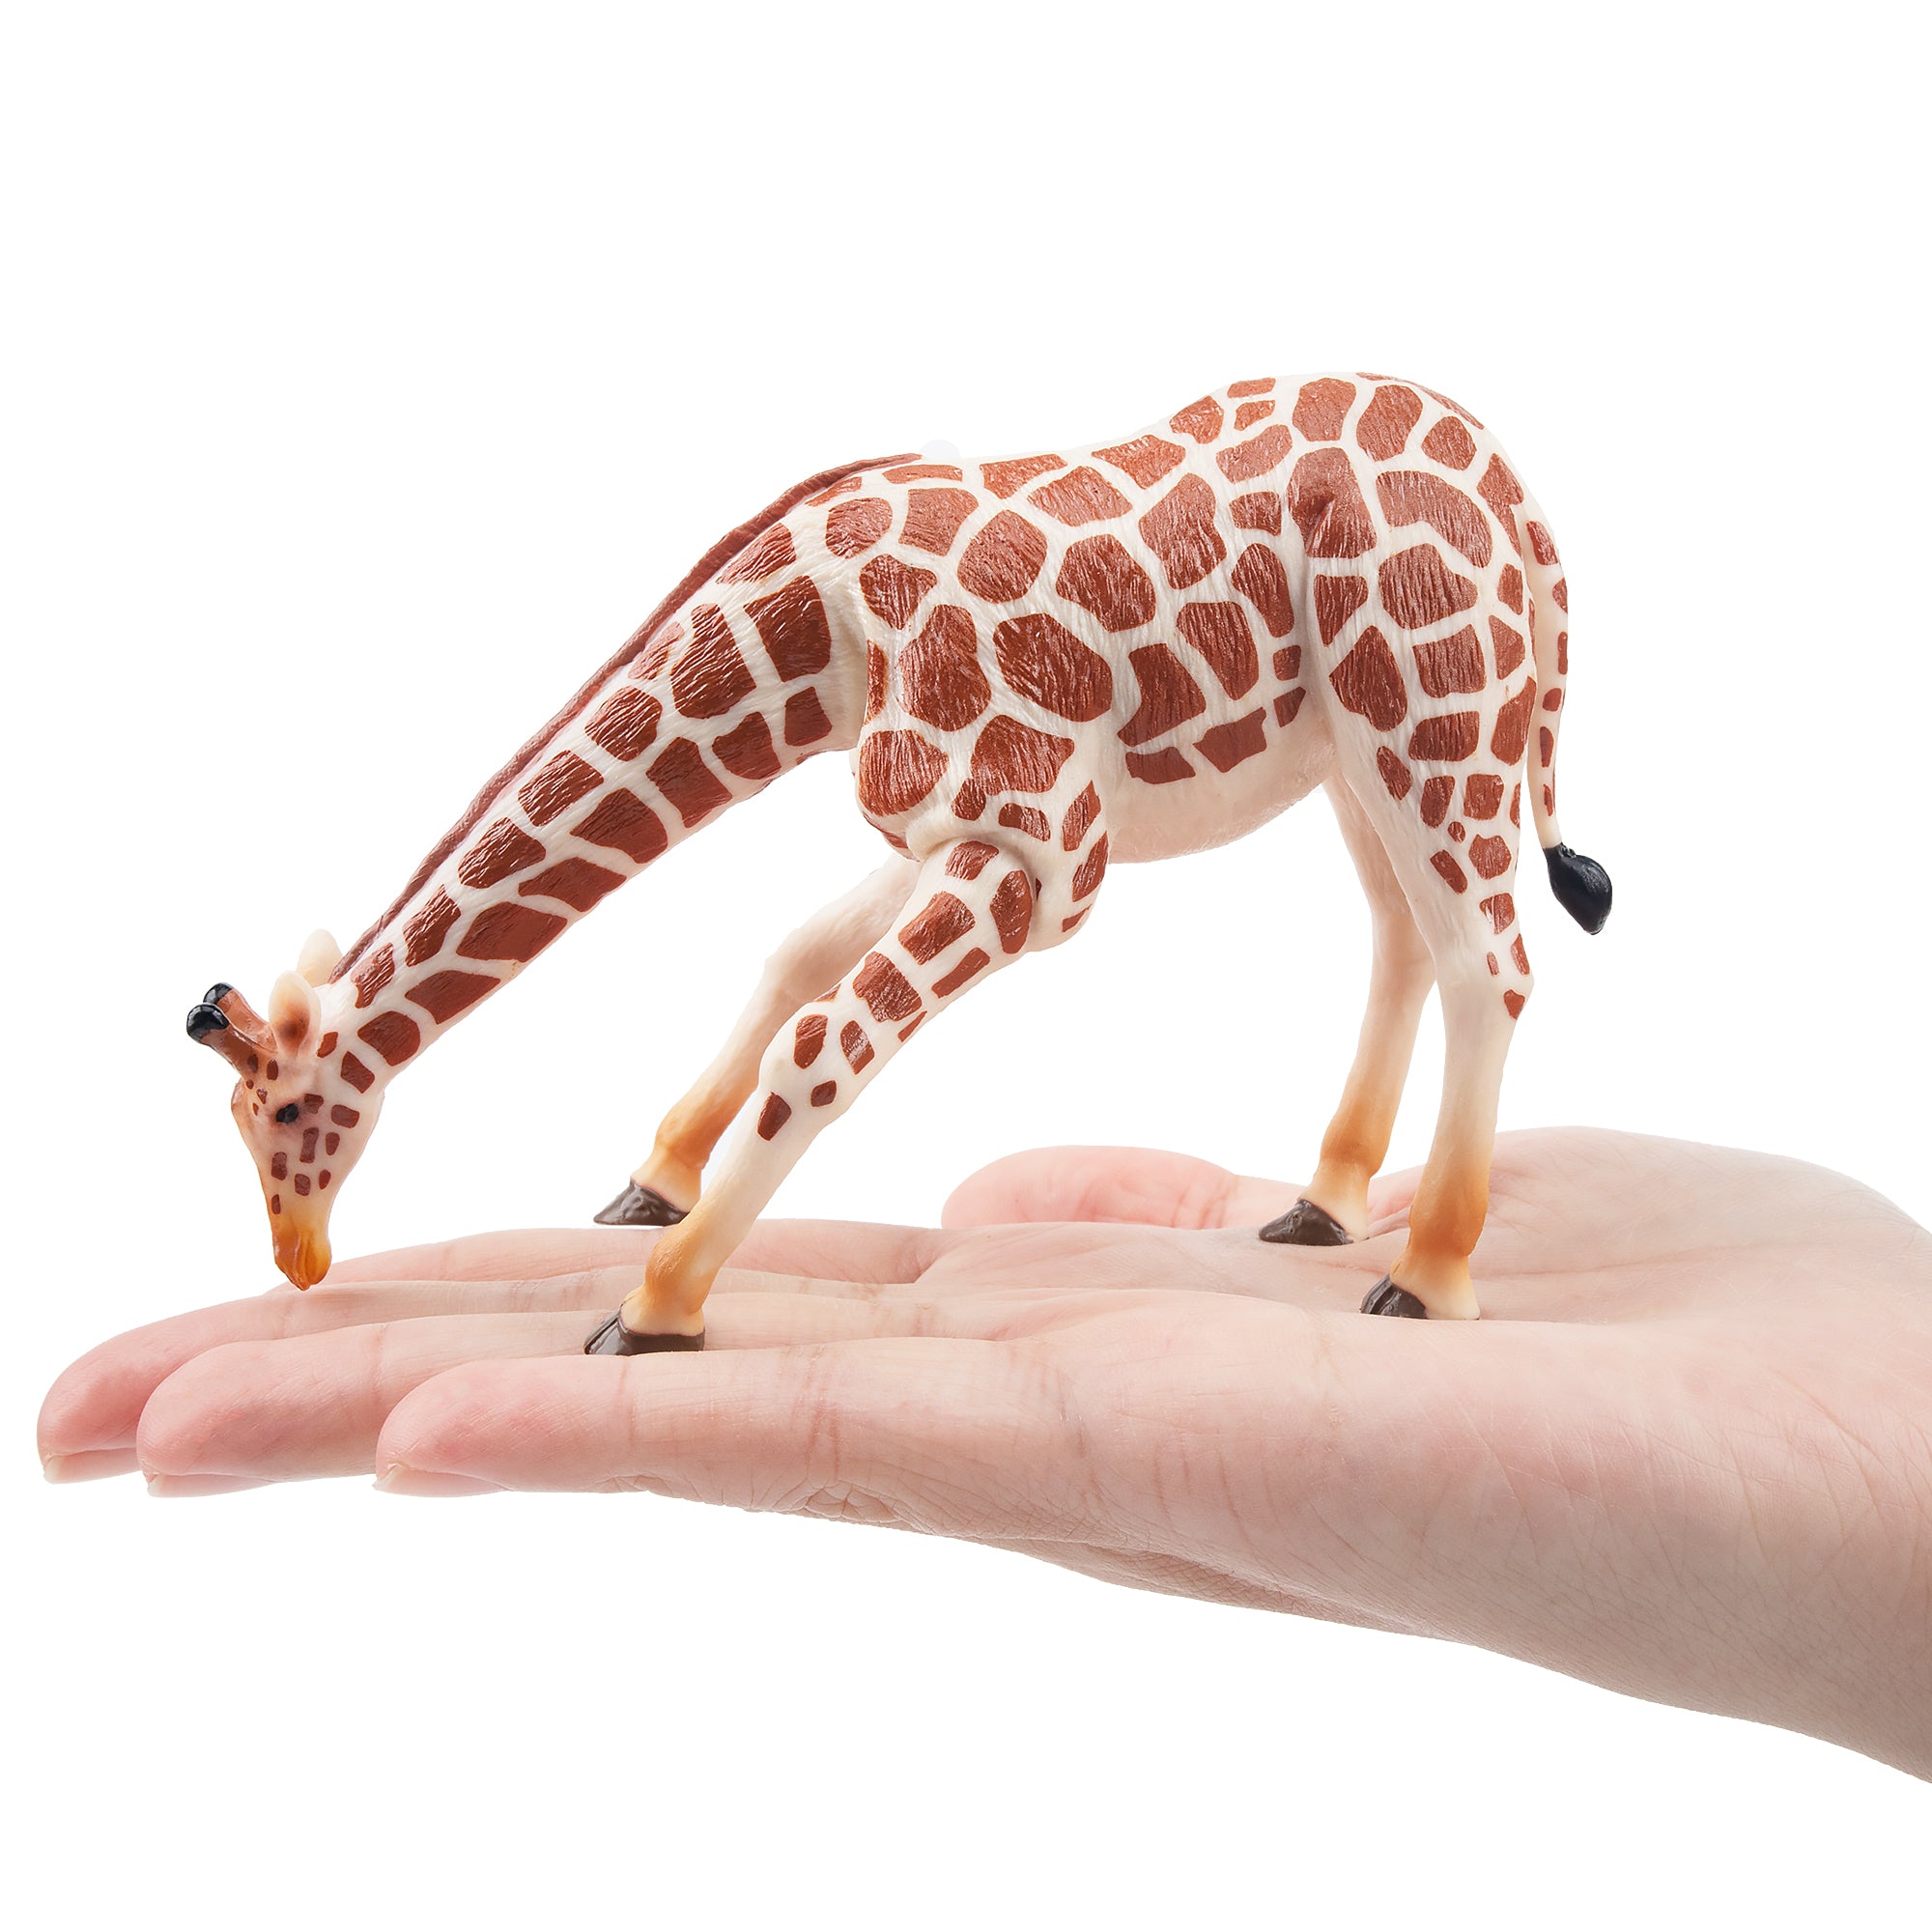 Toymany Grazing Giraffe Figurine Toy-on hand